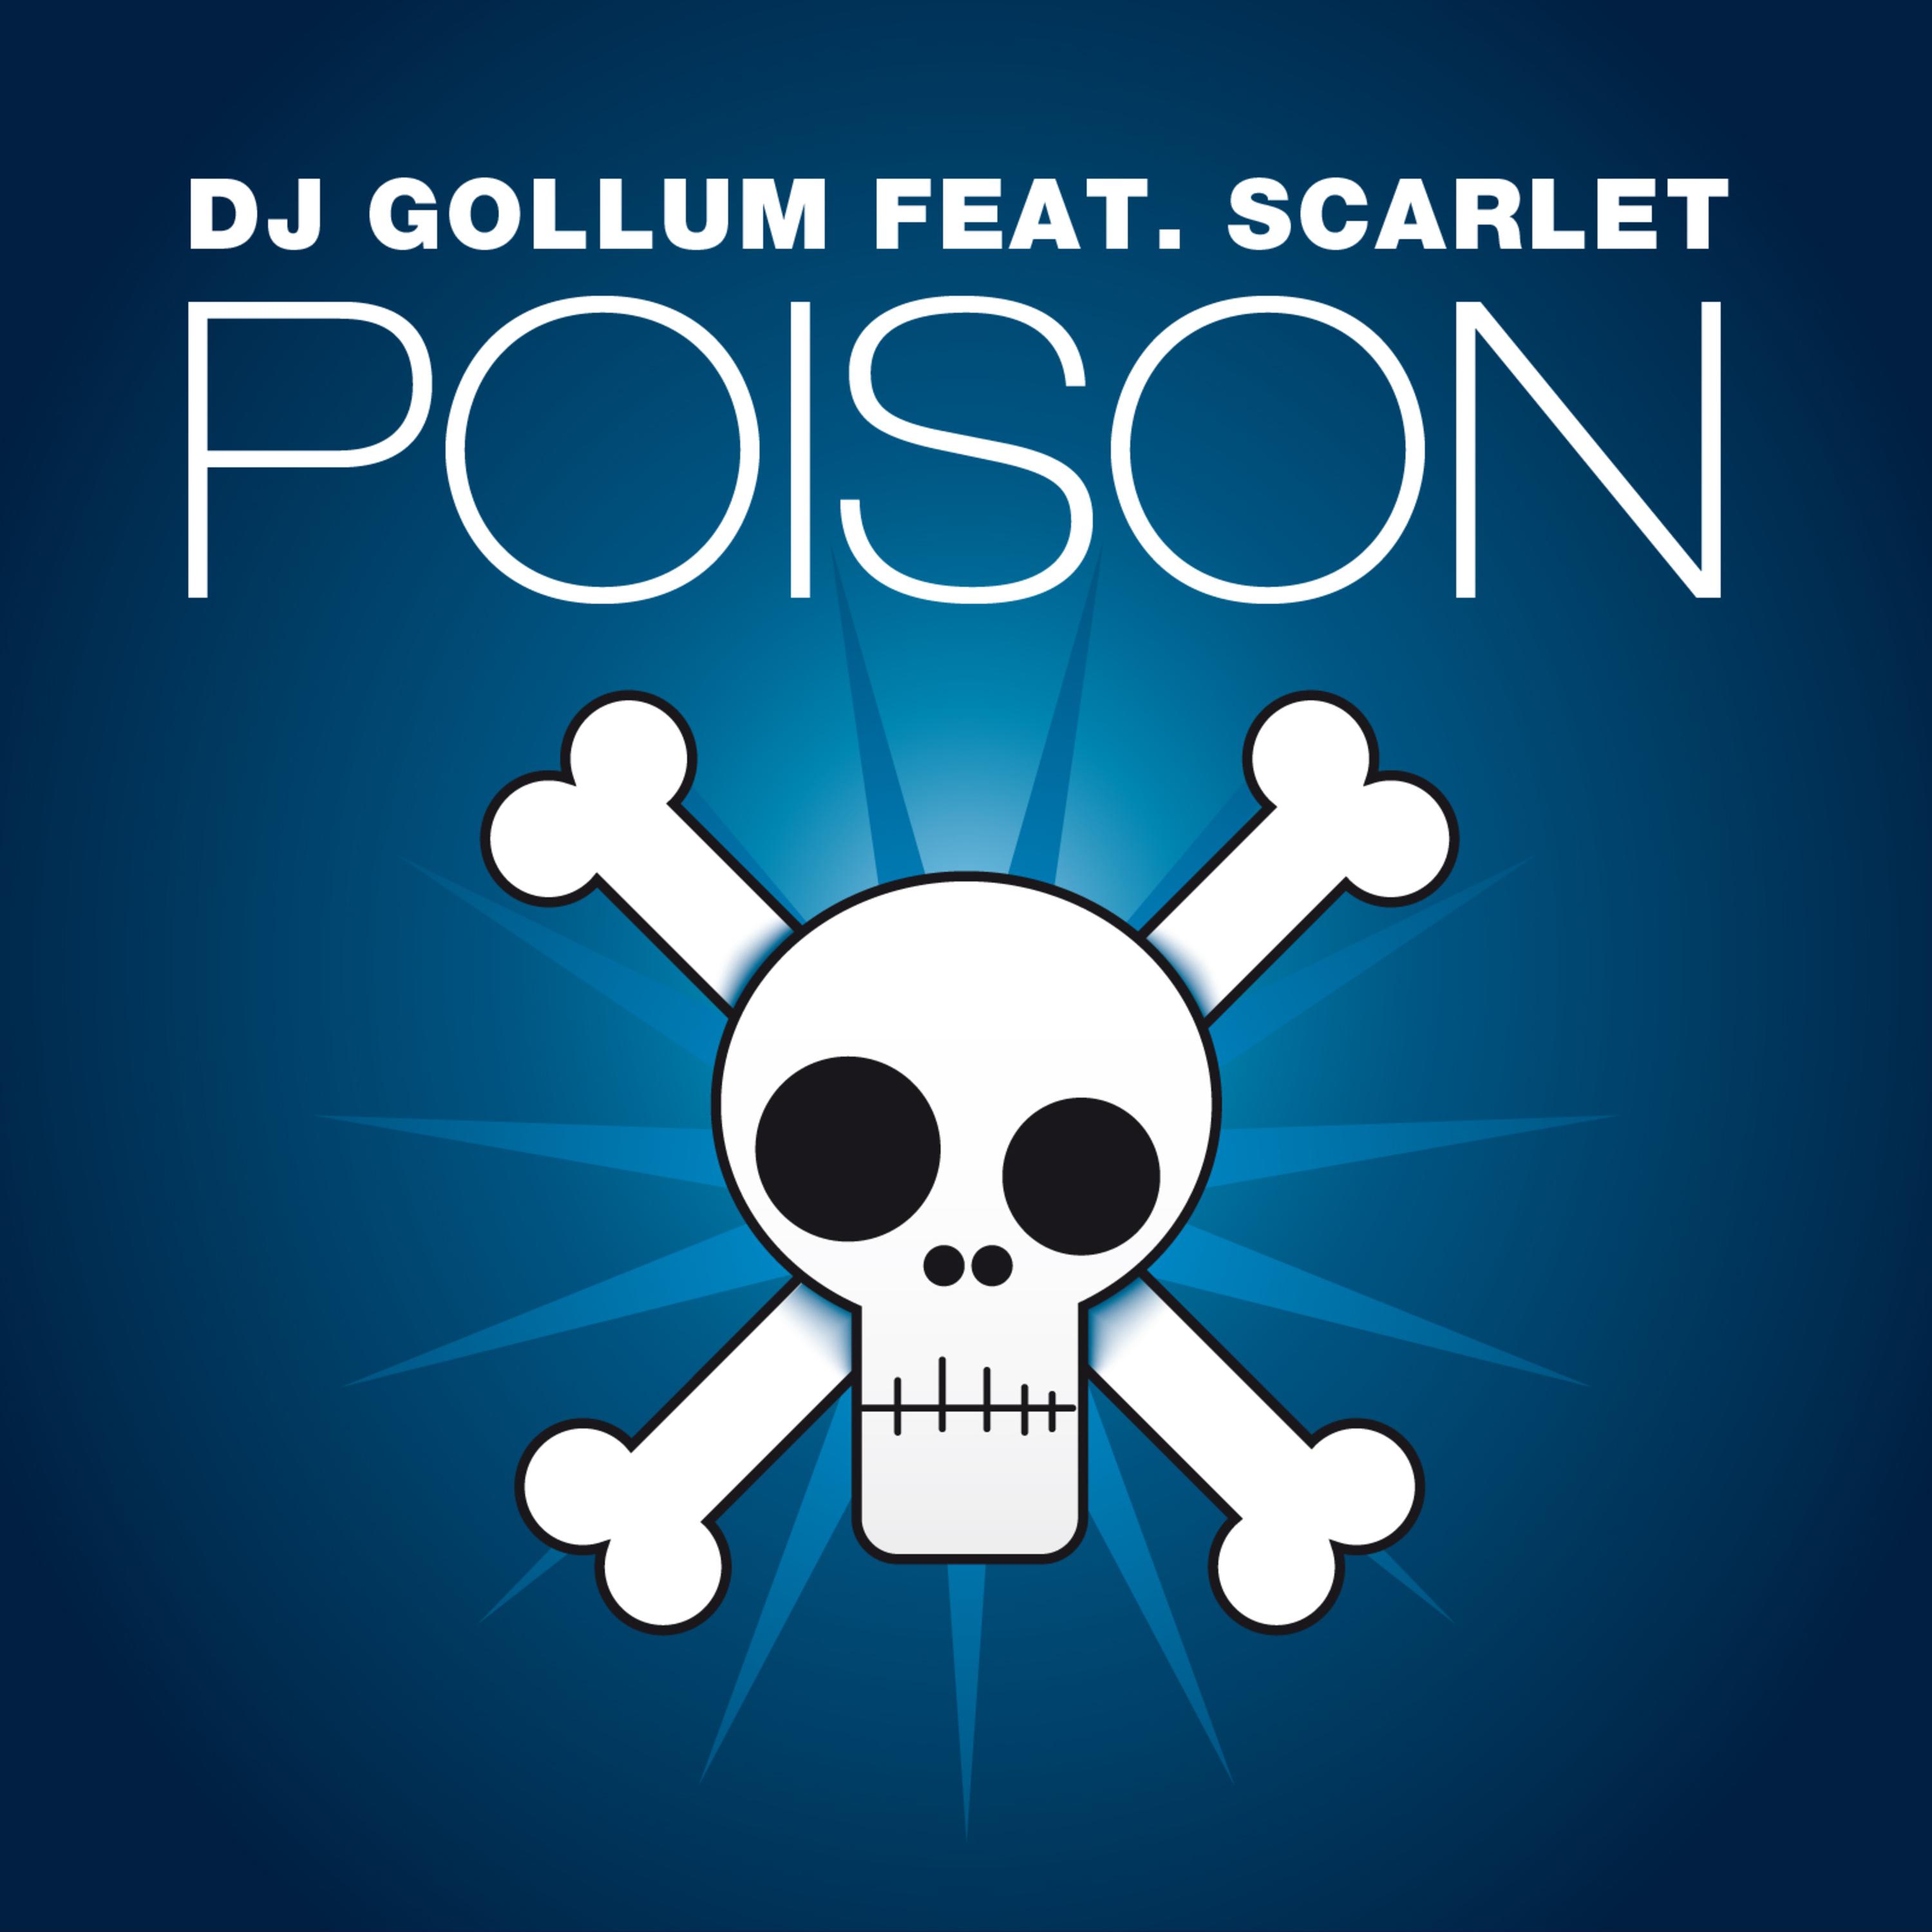 Poison (DJ THT & Ced Tecknoboy Radio Edit)